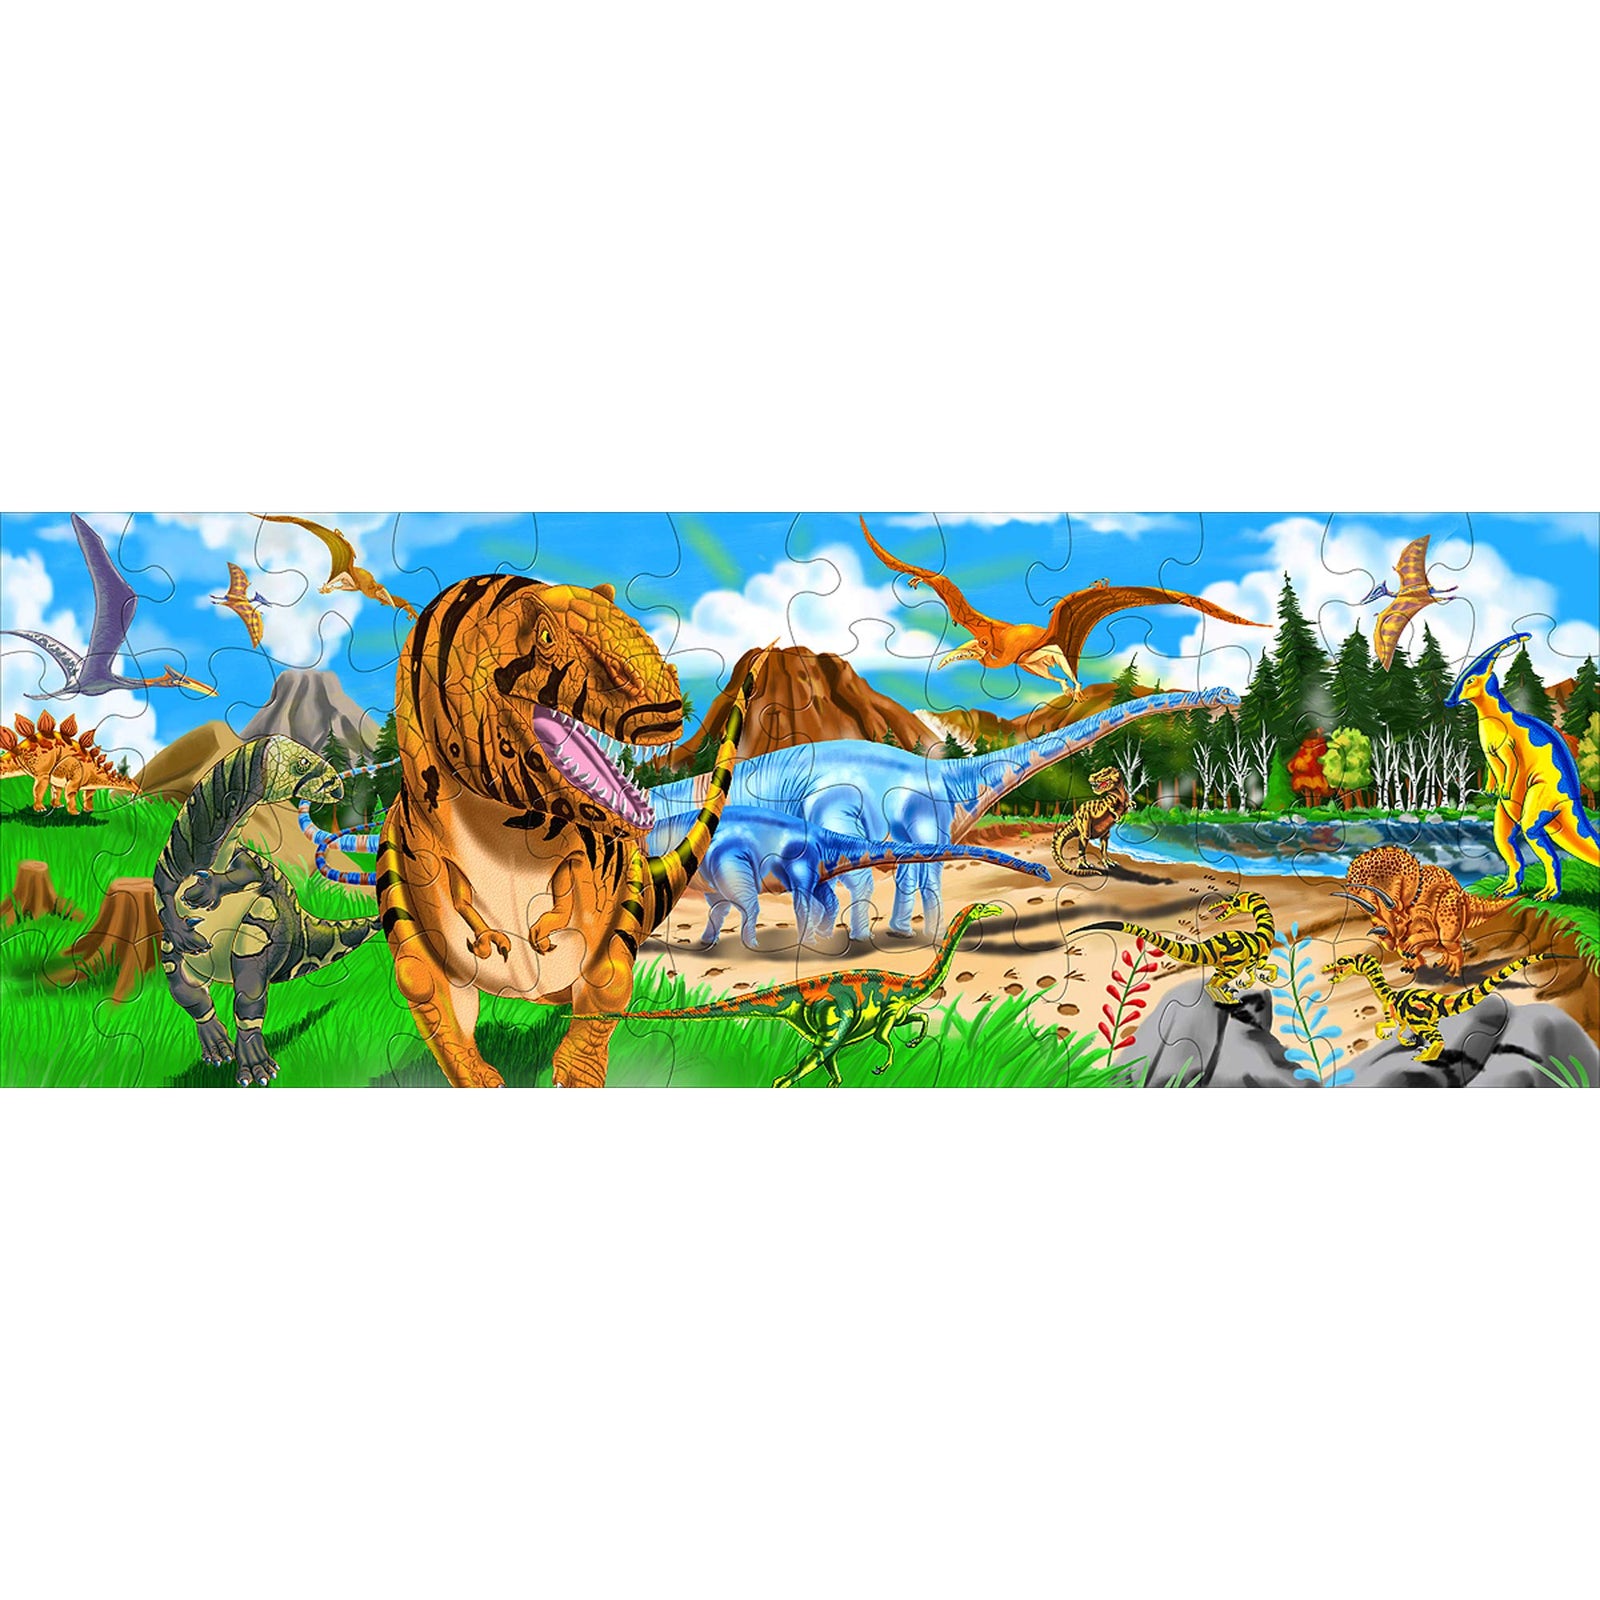 Melissa & Doug Land of Dinosaurs Floor Puzzle (48 pcs, 4 feet long)